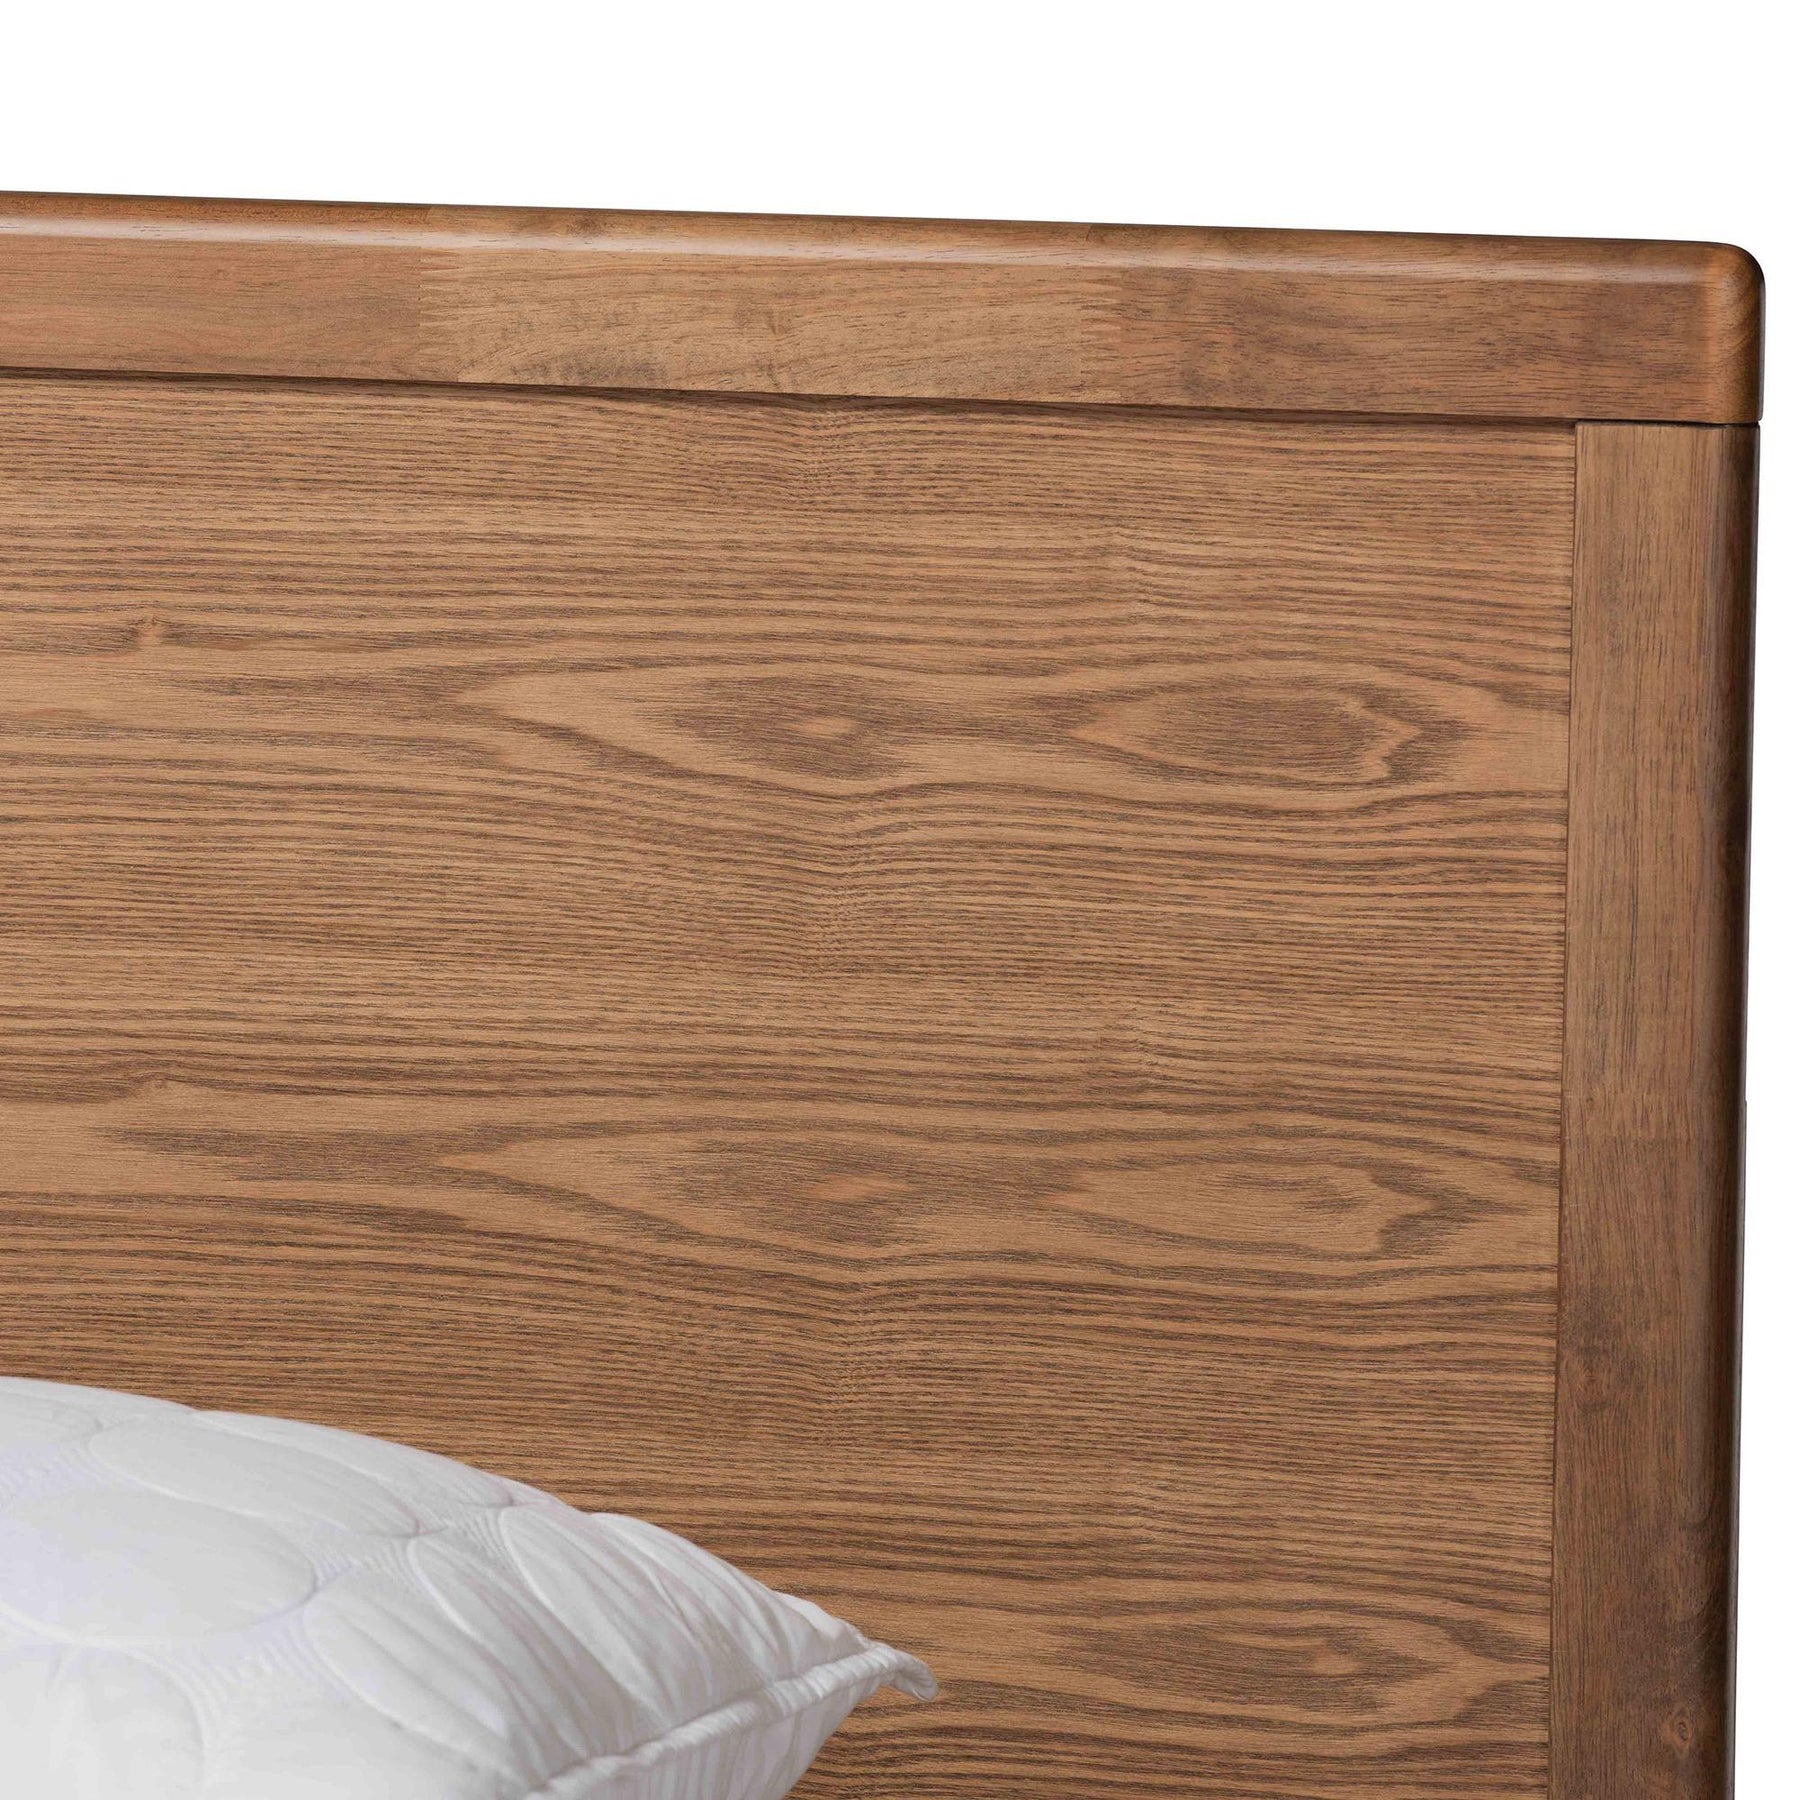 Baxton Studio Aras Modern And Contemporary Transitional Ash Walnut Brown Finished Wood King Size 3-Drawer Platform Storage Bed - Aras-Ash Walnut-King